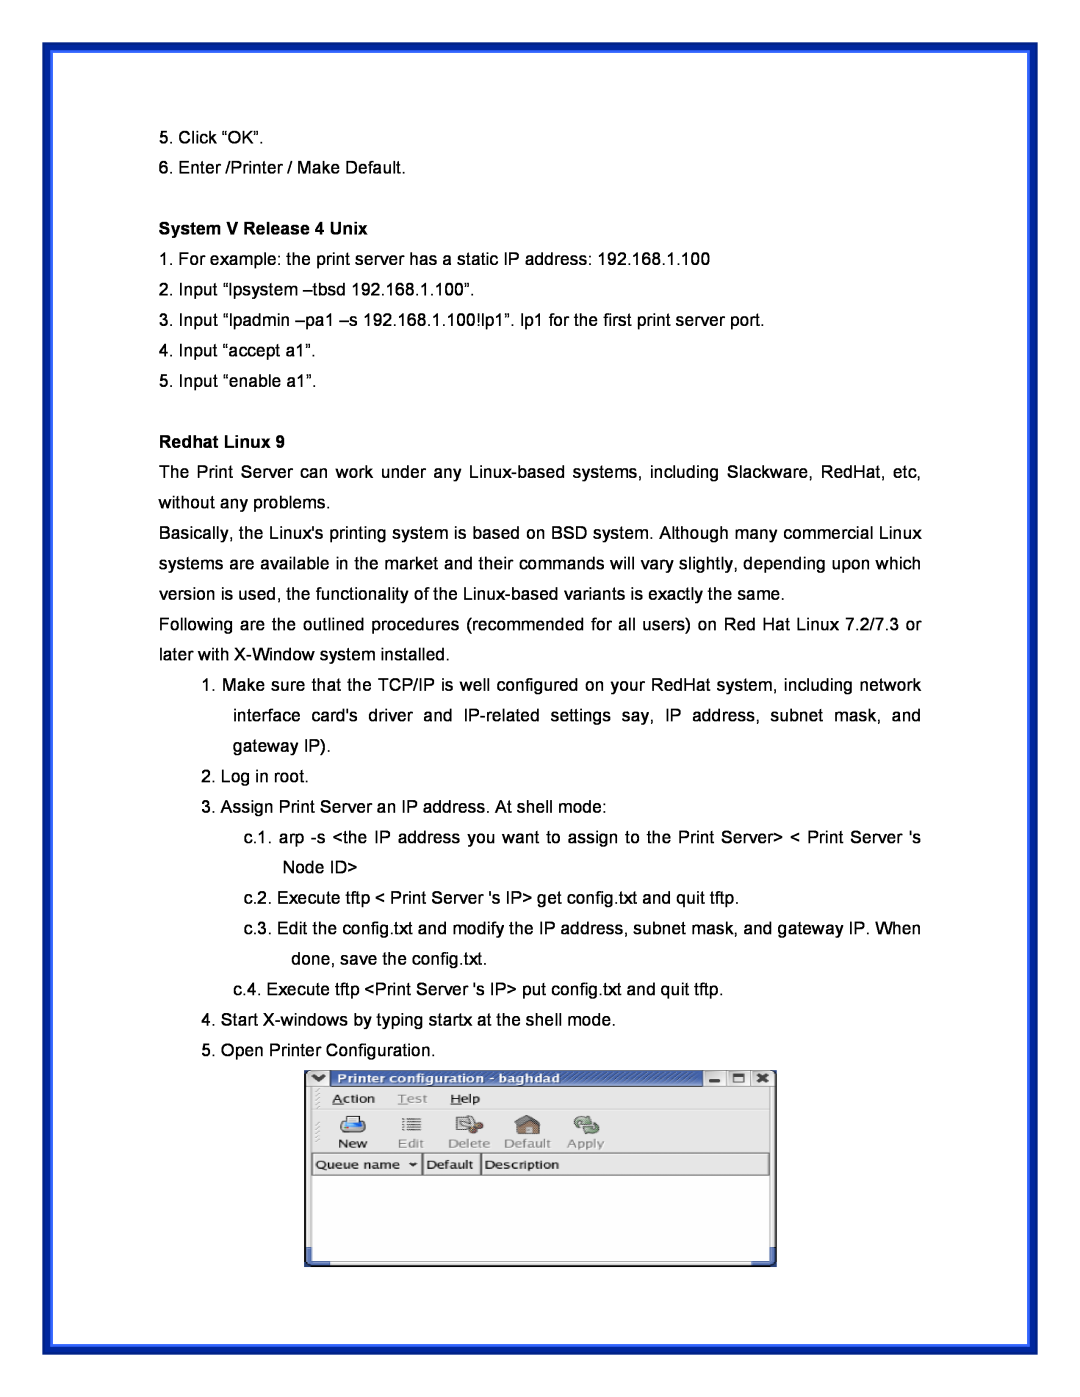 Epson (USB 2.0) user manual System V Release 4 Unix, Redhat Linux 